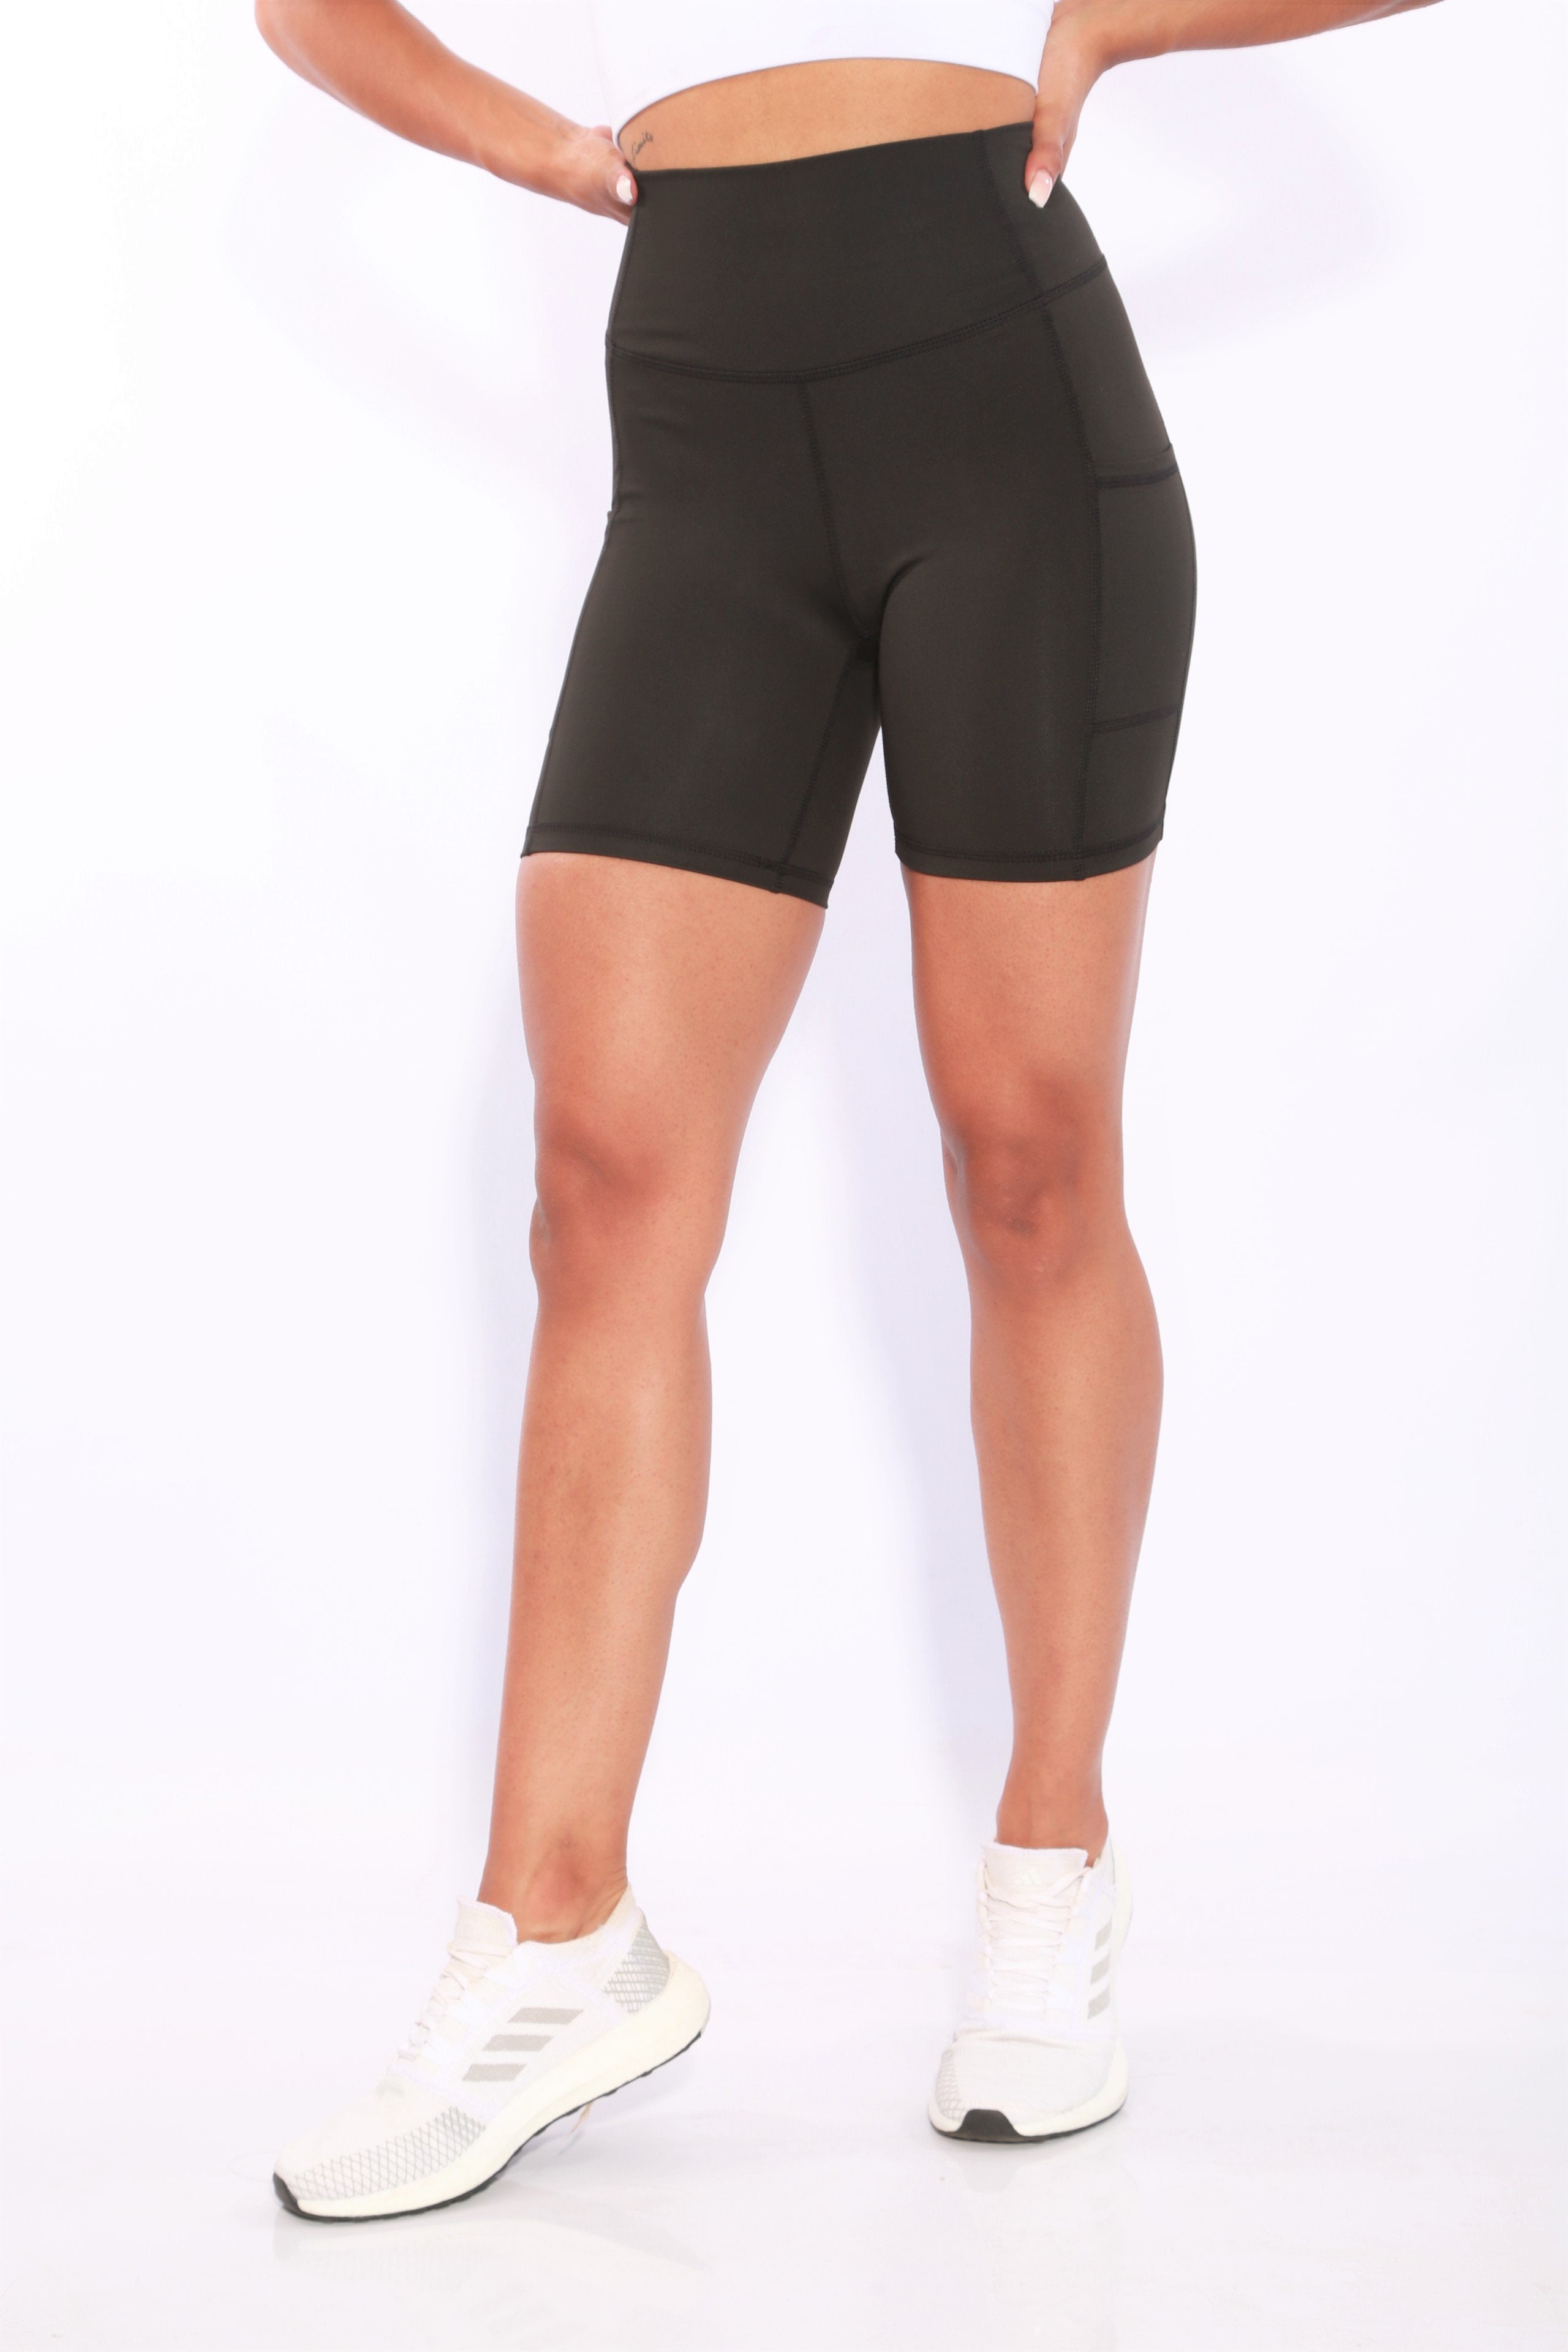 Image of Wonderfit Staple Shorts with phone pocket -Black